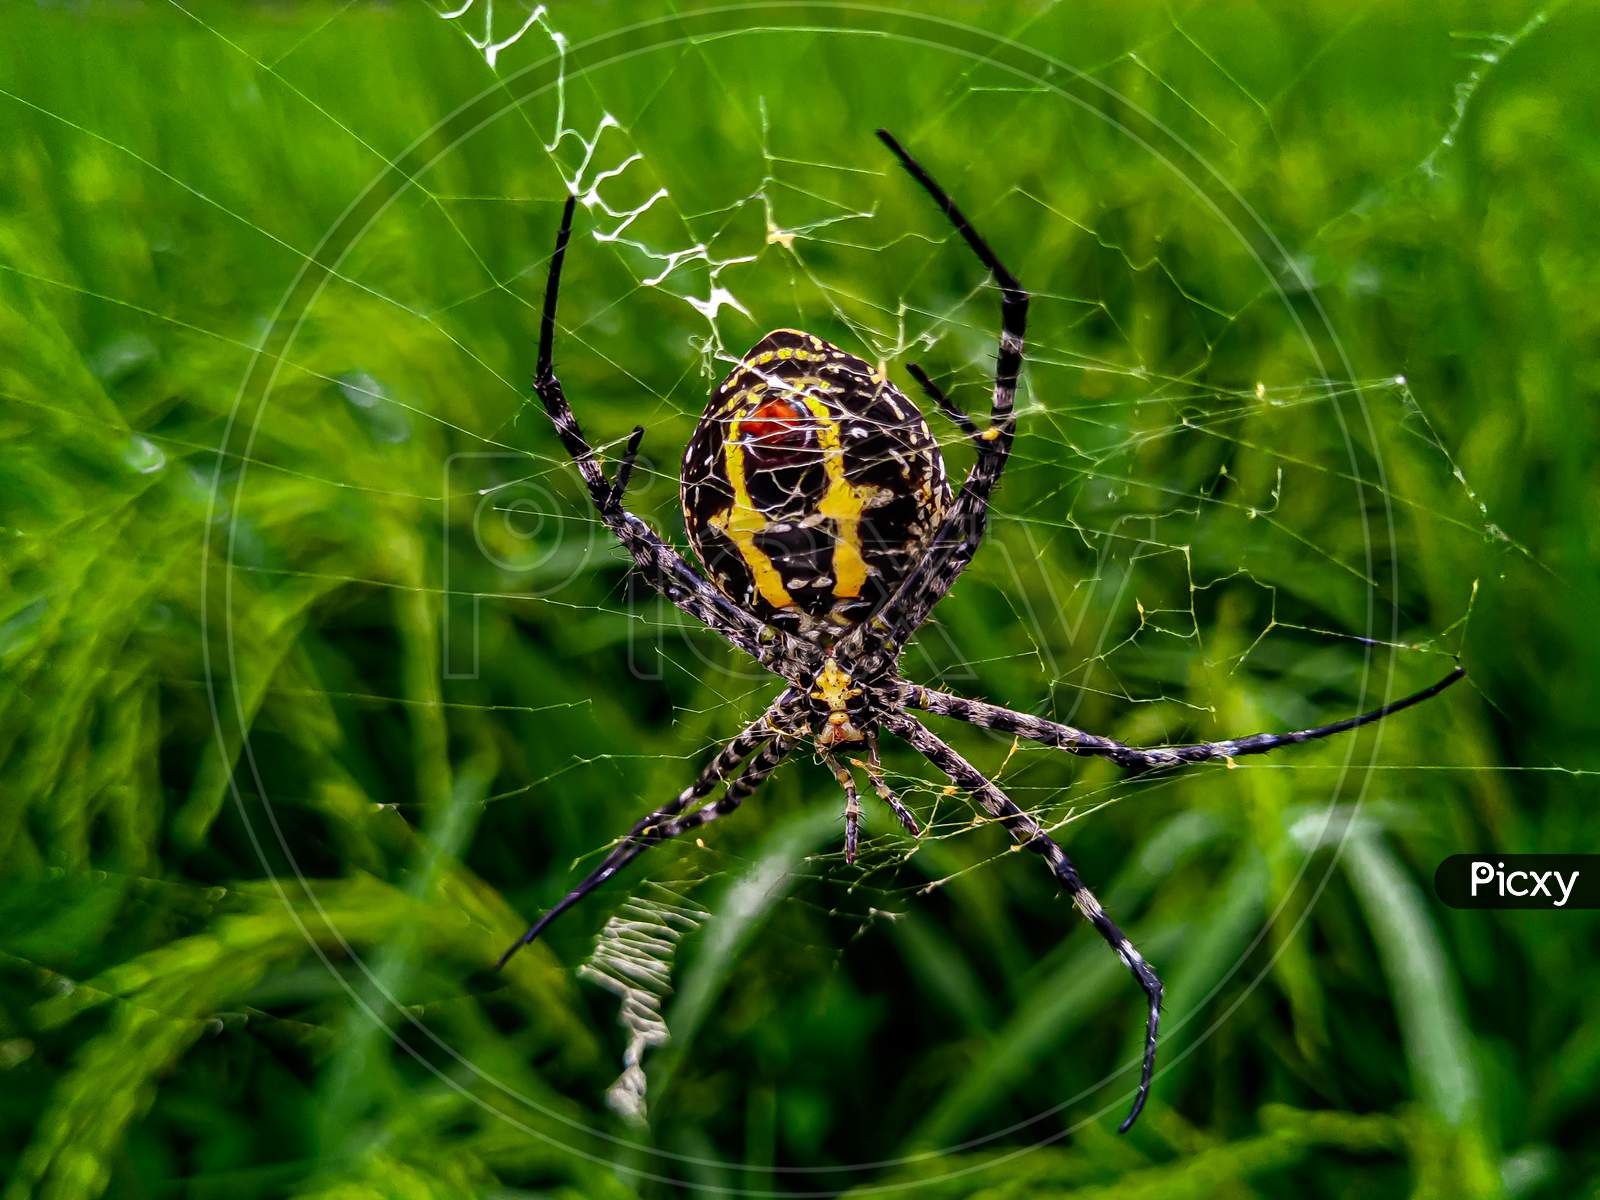 A harmless Orb-Weaver Spider.